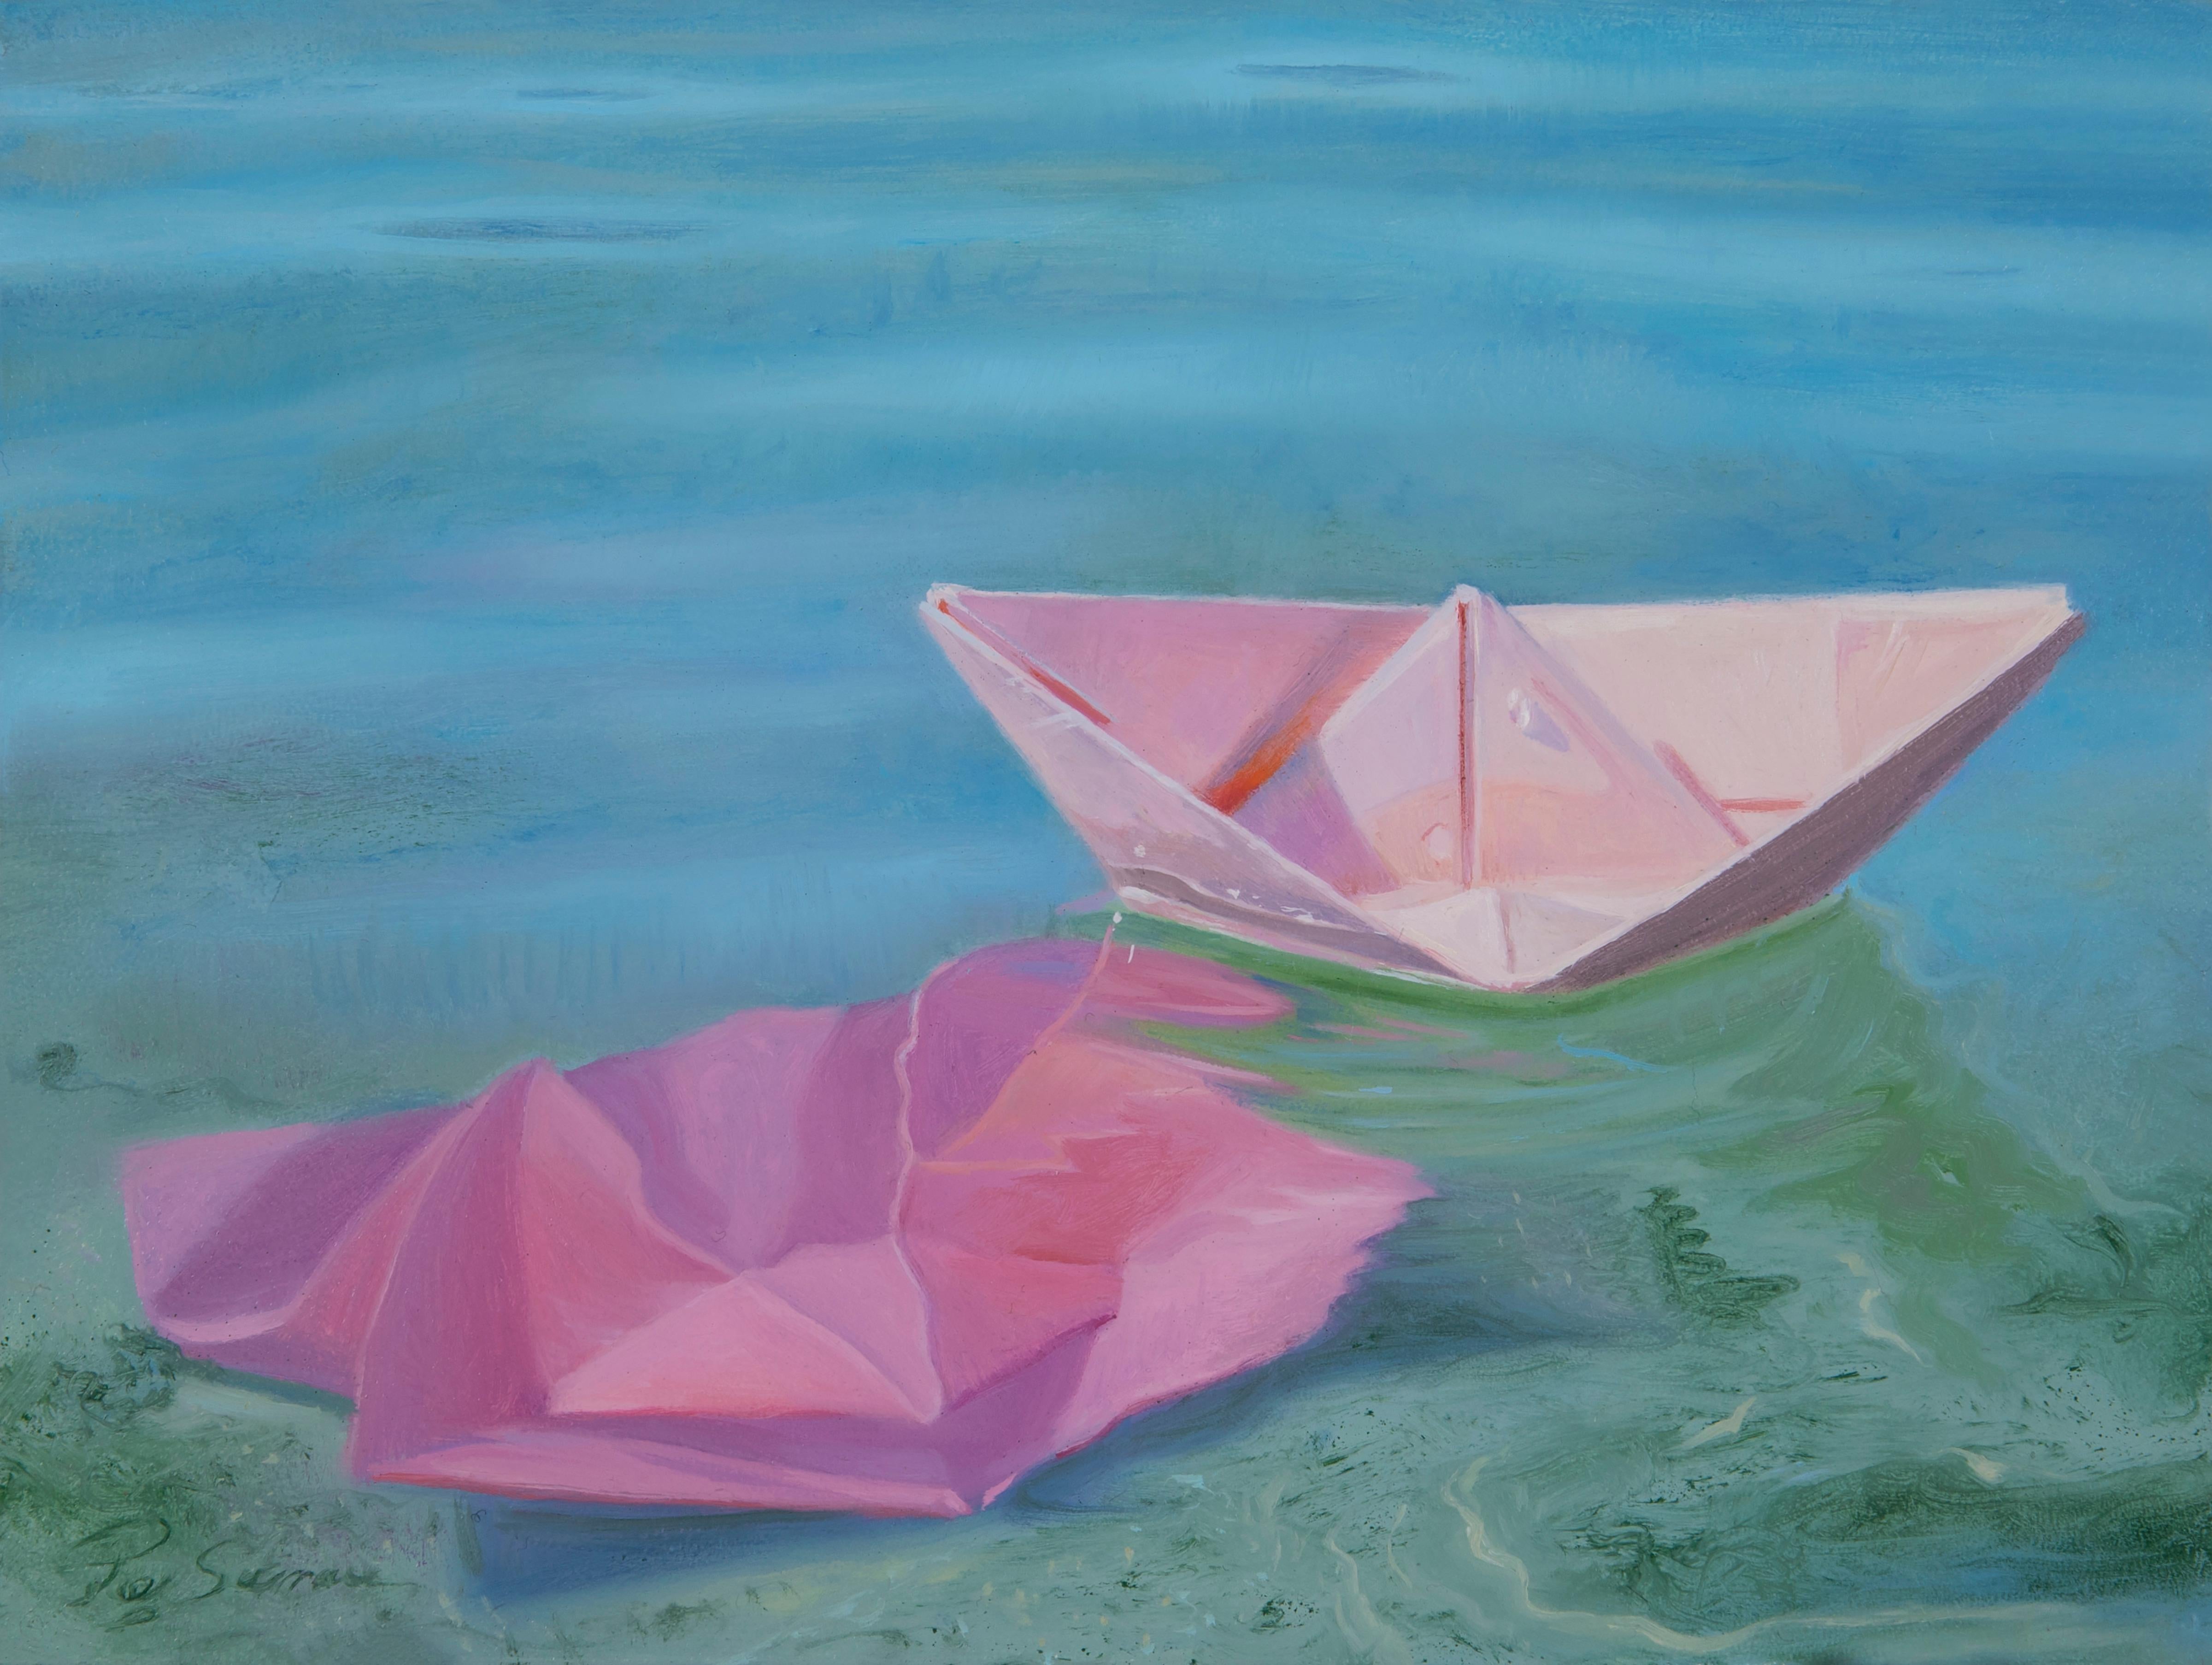 Pegah Samaie Figurative Painting - "Keeping Floating", Oil Painting